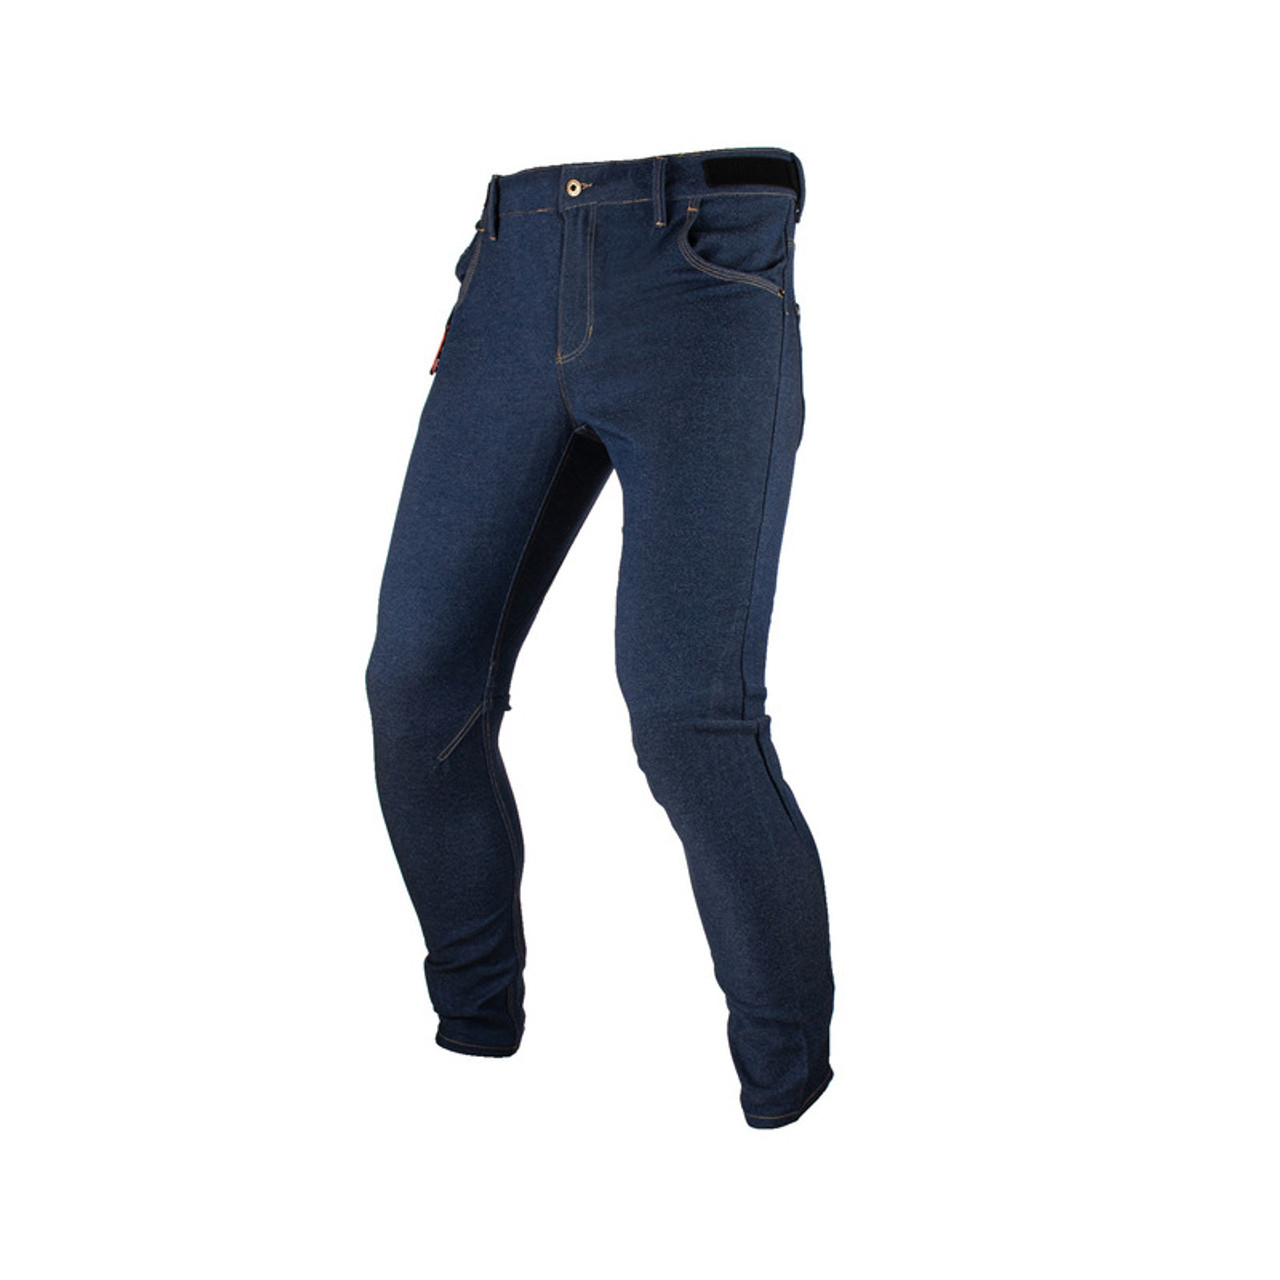 FORBIDDEN PANTS – Jeans Warehouse